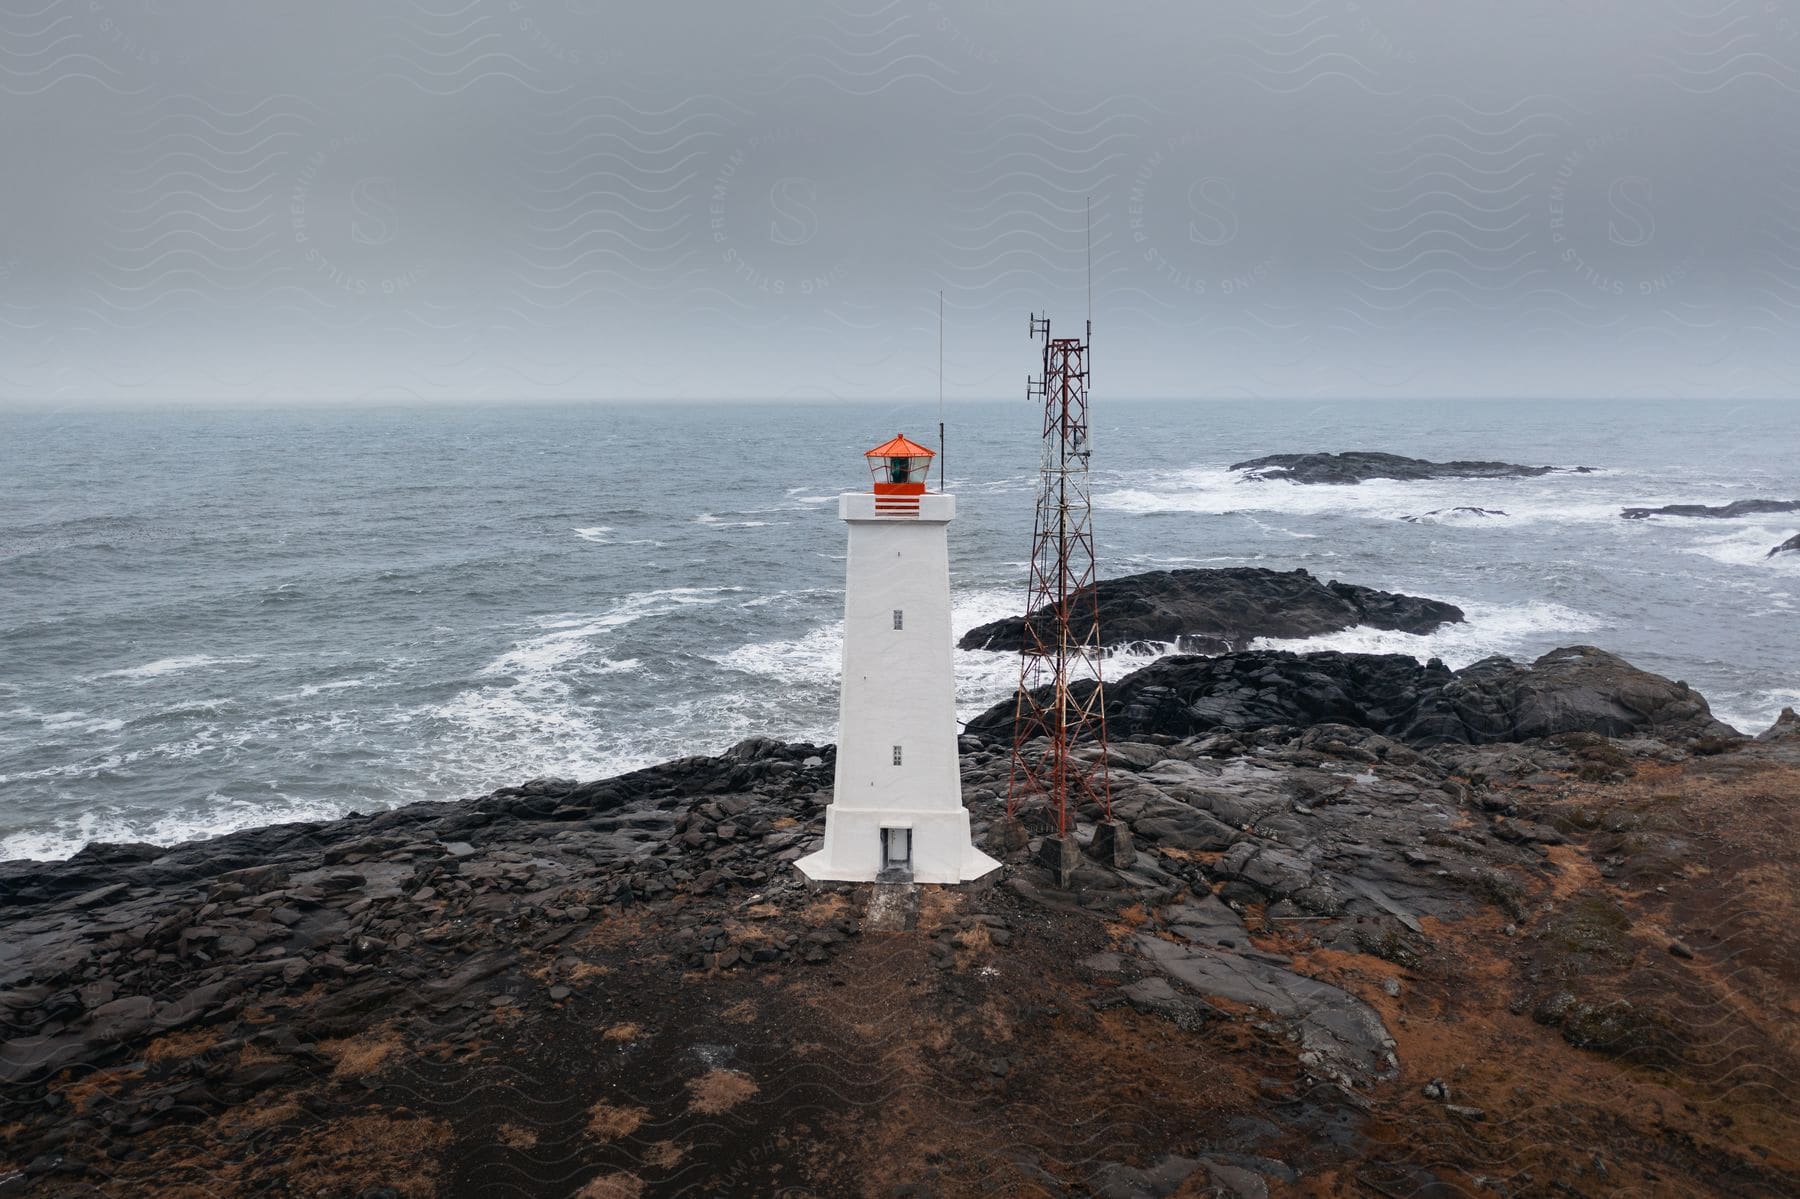 A lighthouse with radio tower on a rocky coast